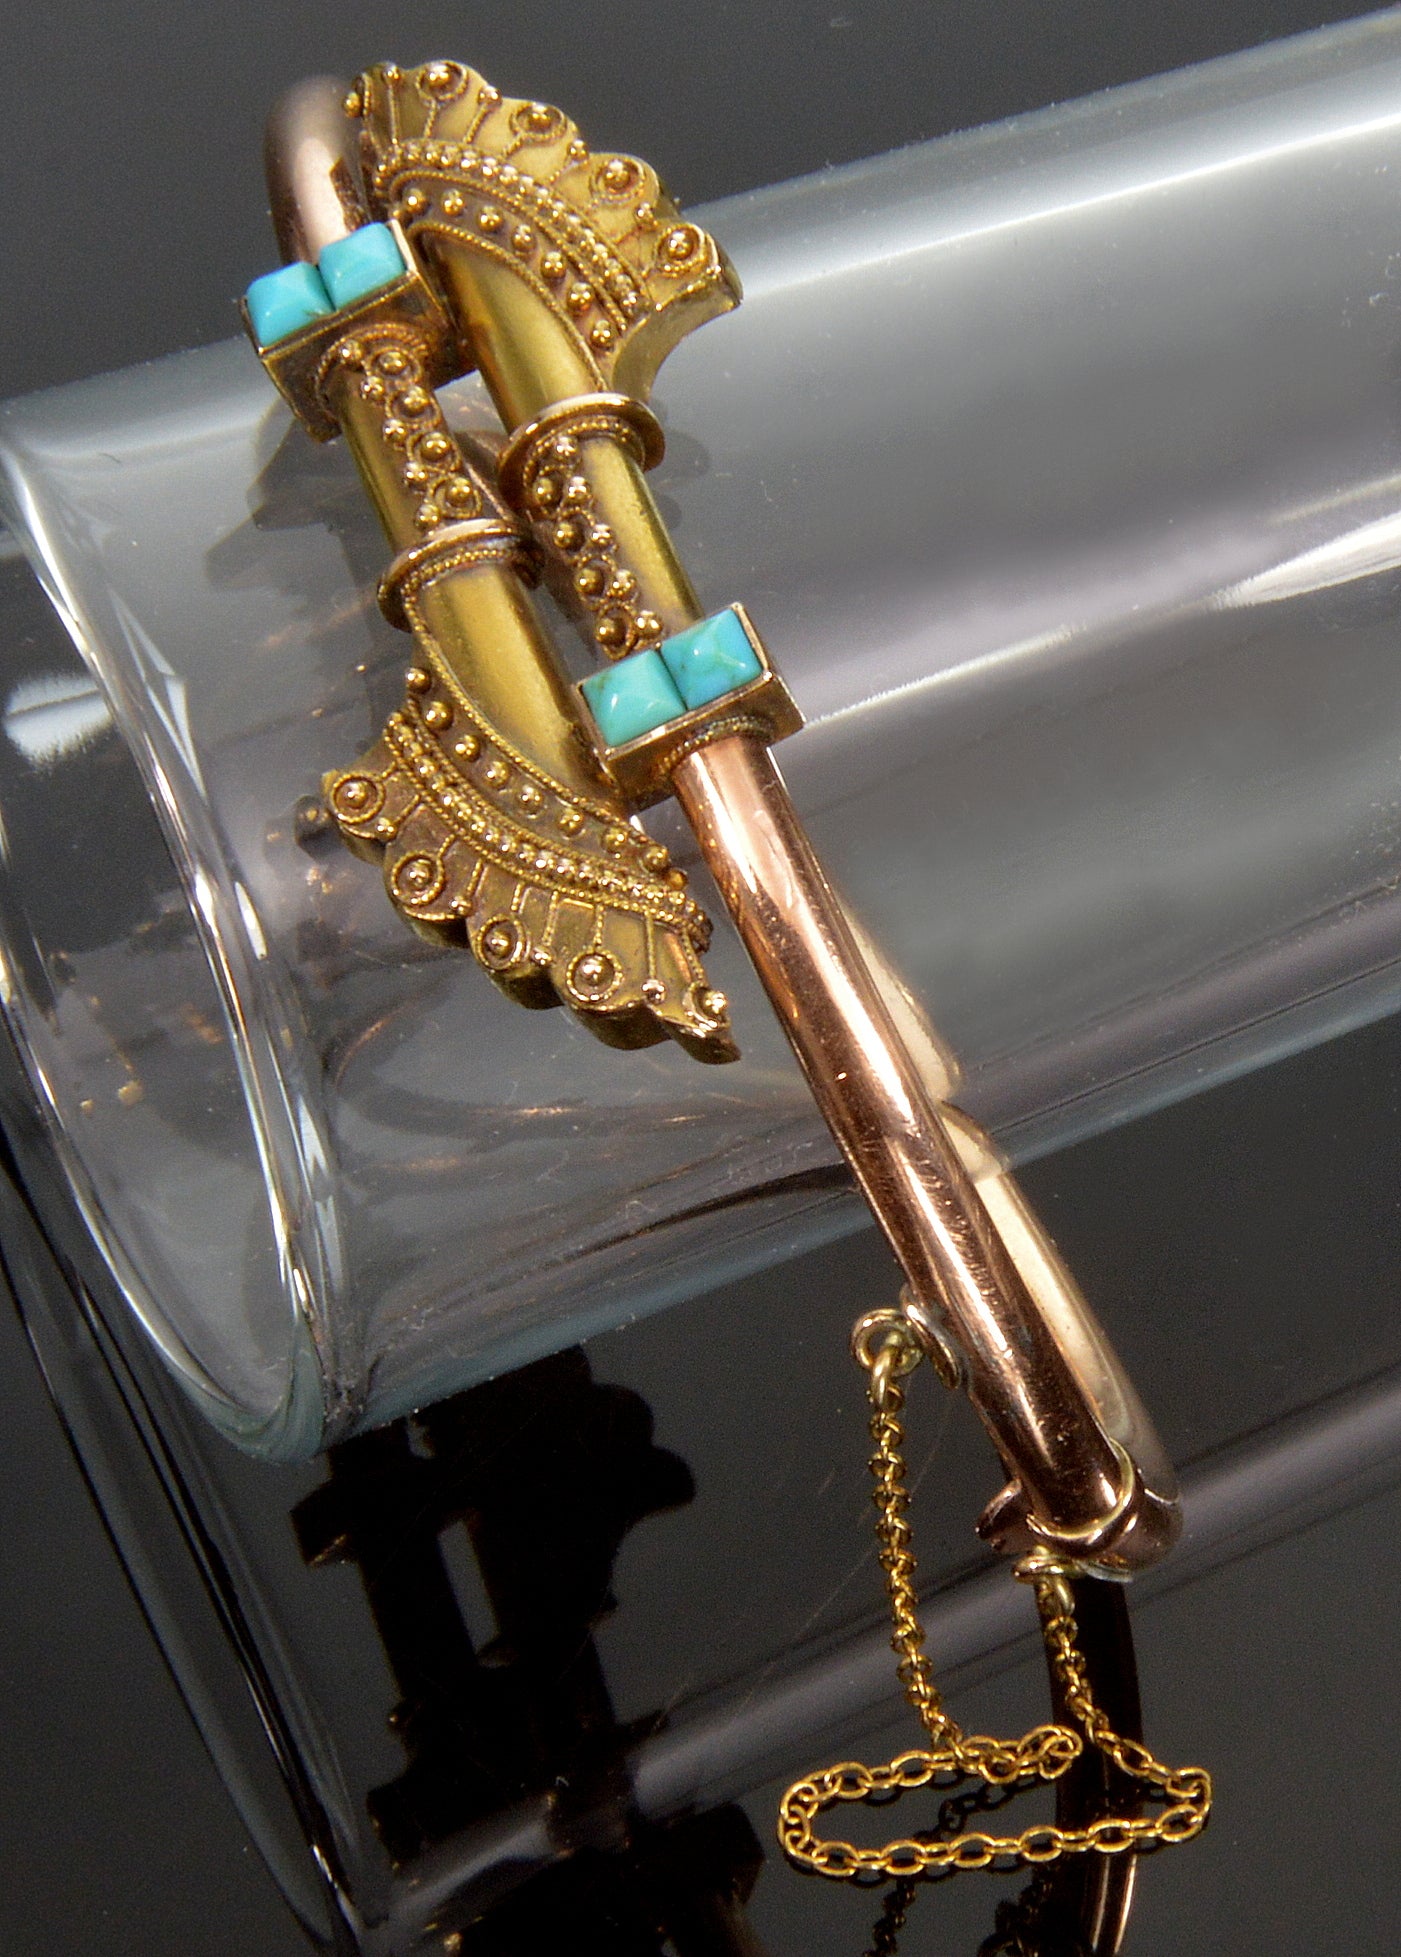 Antique Victorian Etruscan Revival 14K Gold Turquoise Hinged Bracelet C.1870